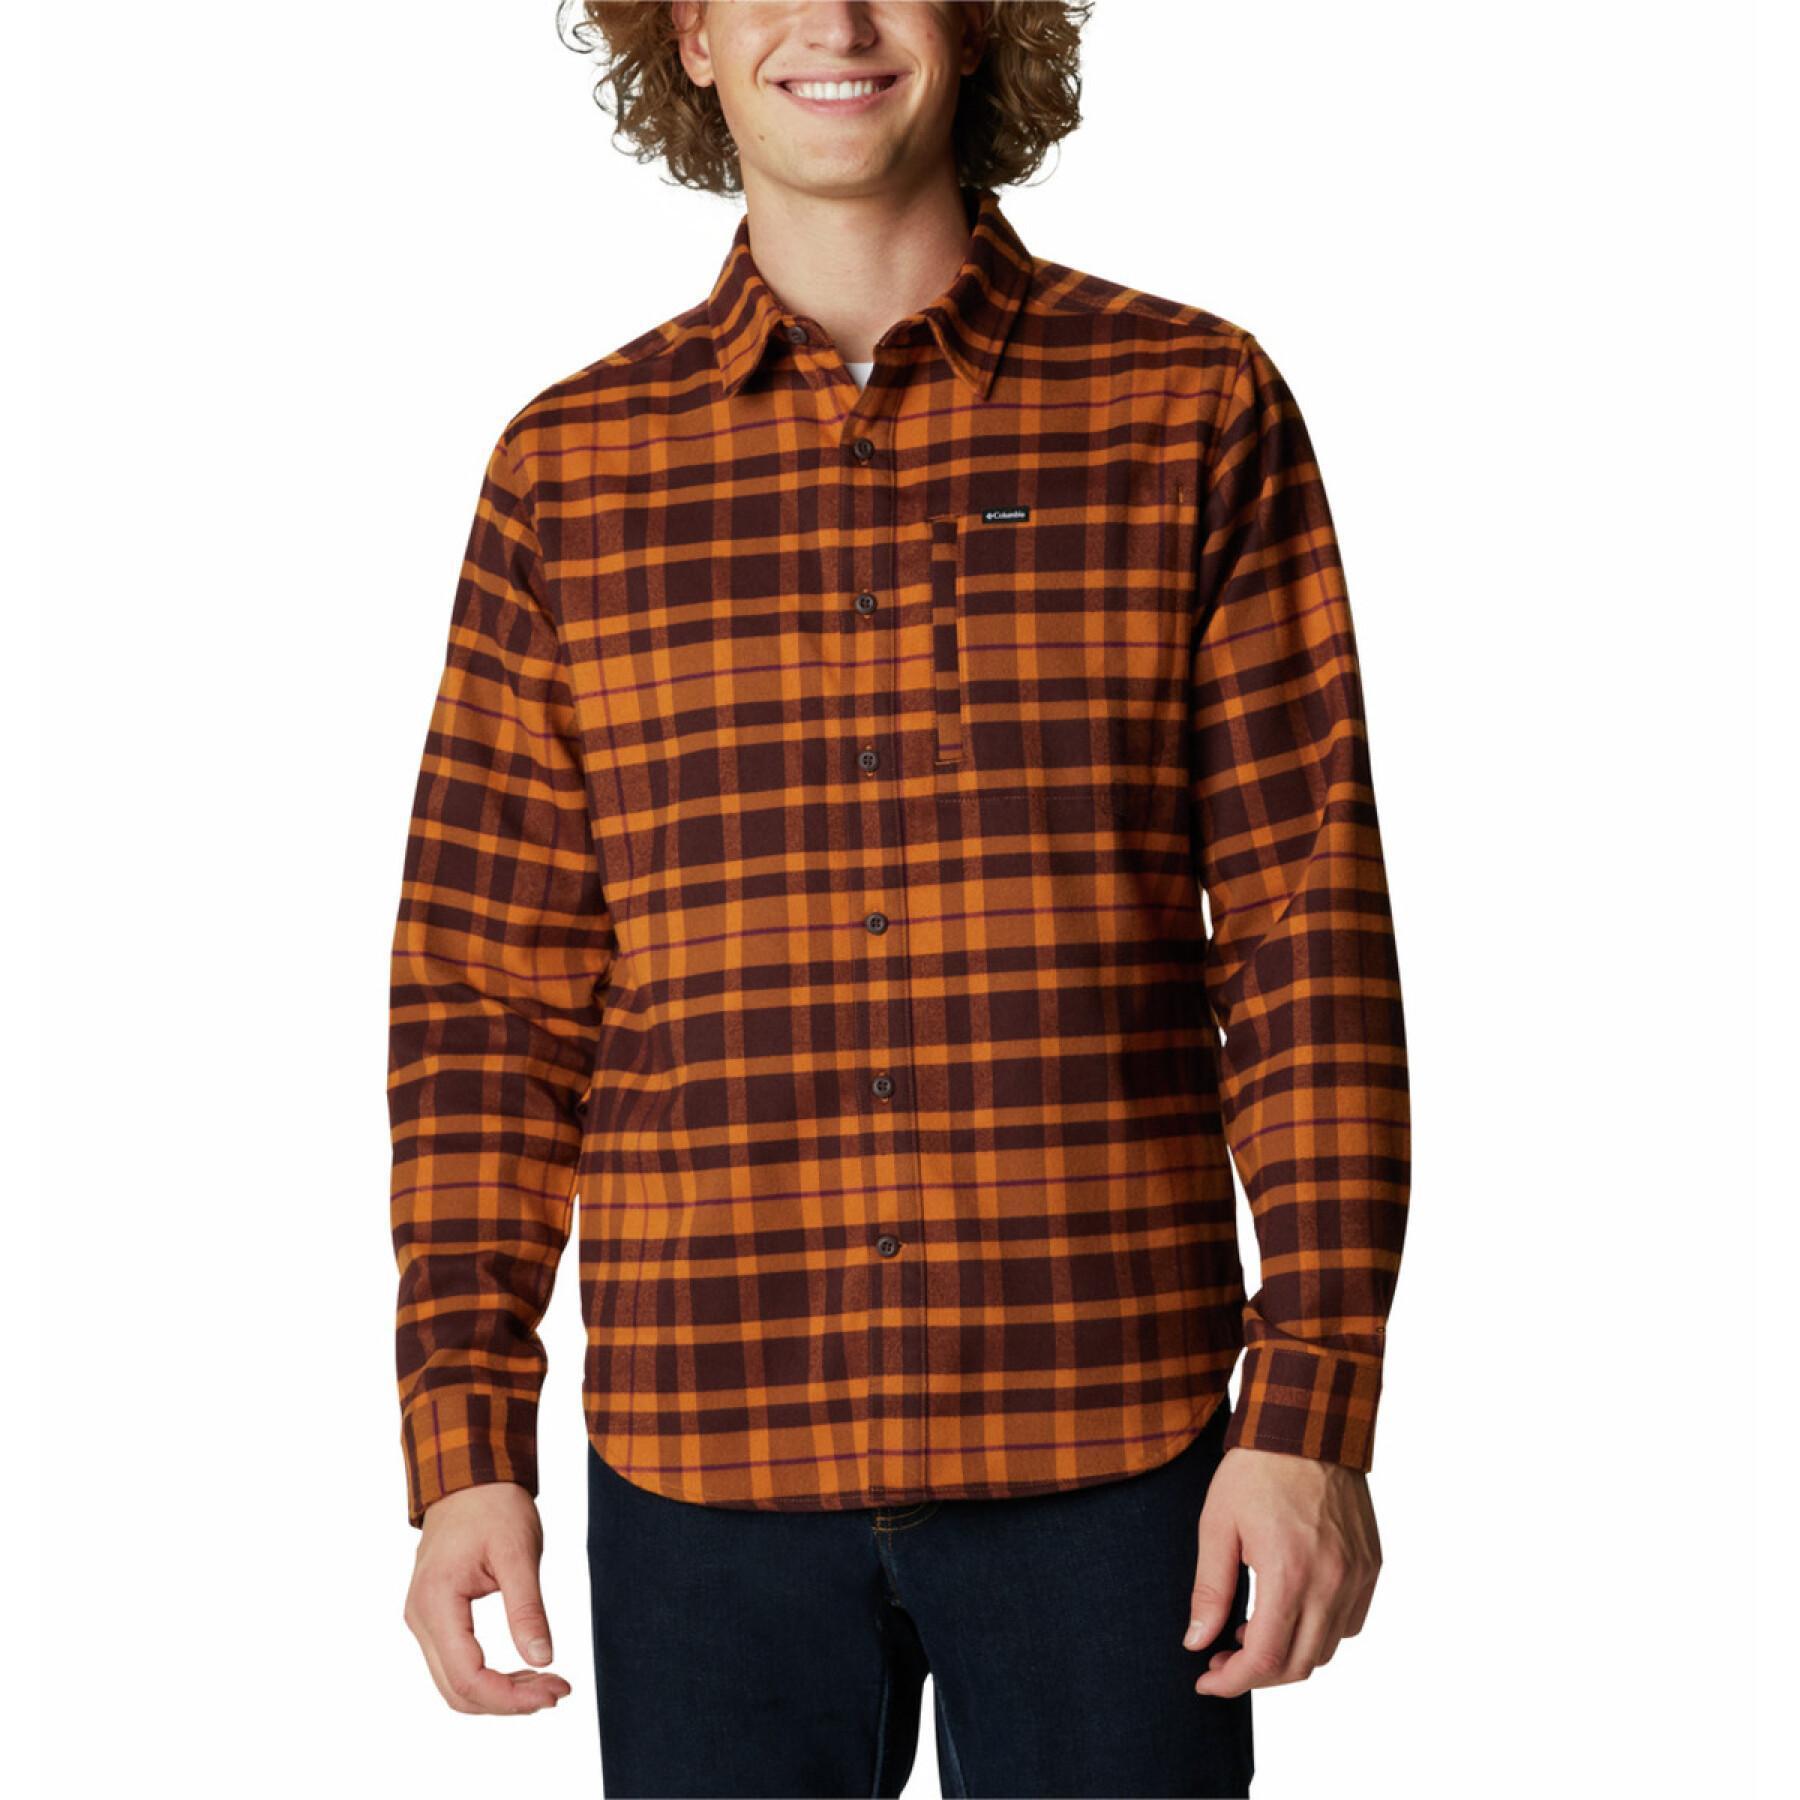 Shirt Columbia Outdoor Elements II Flannel